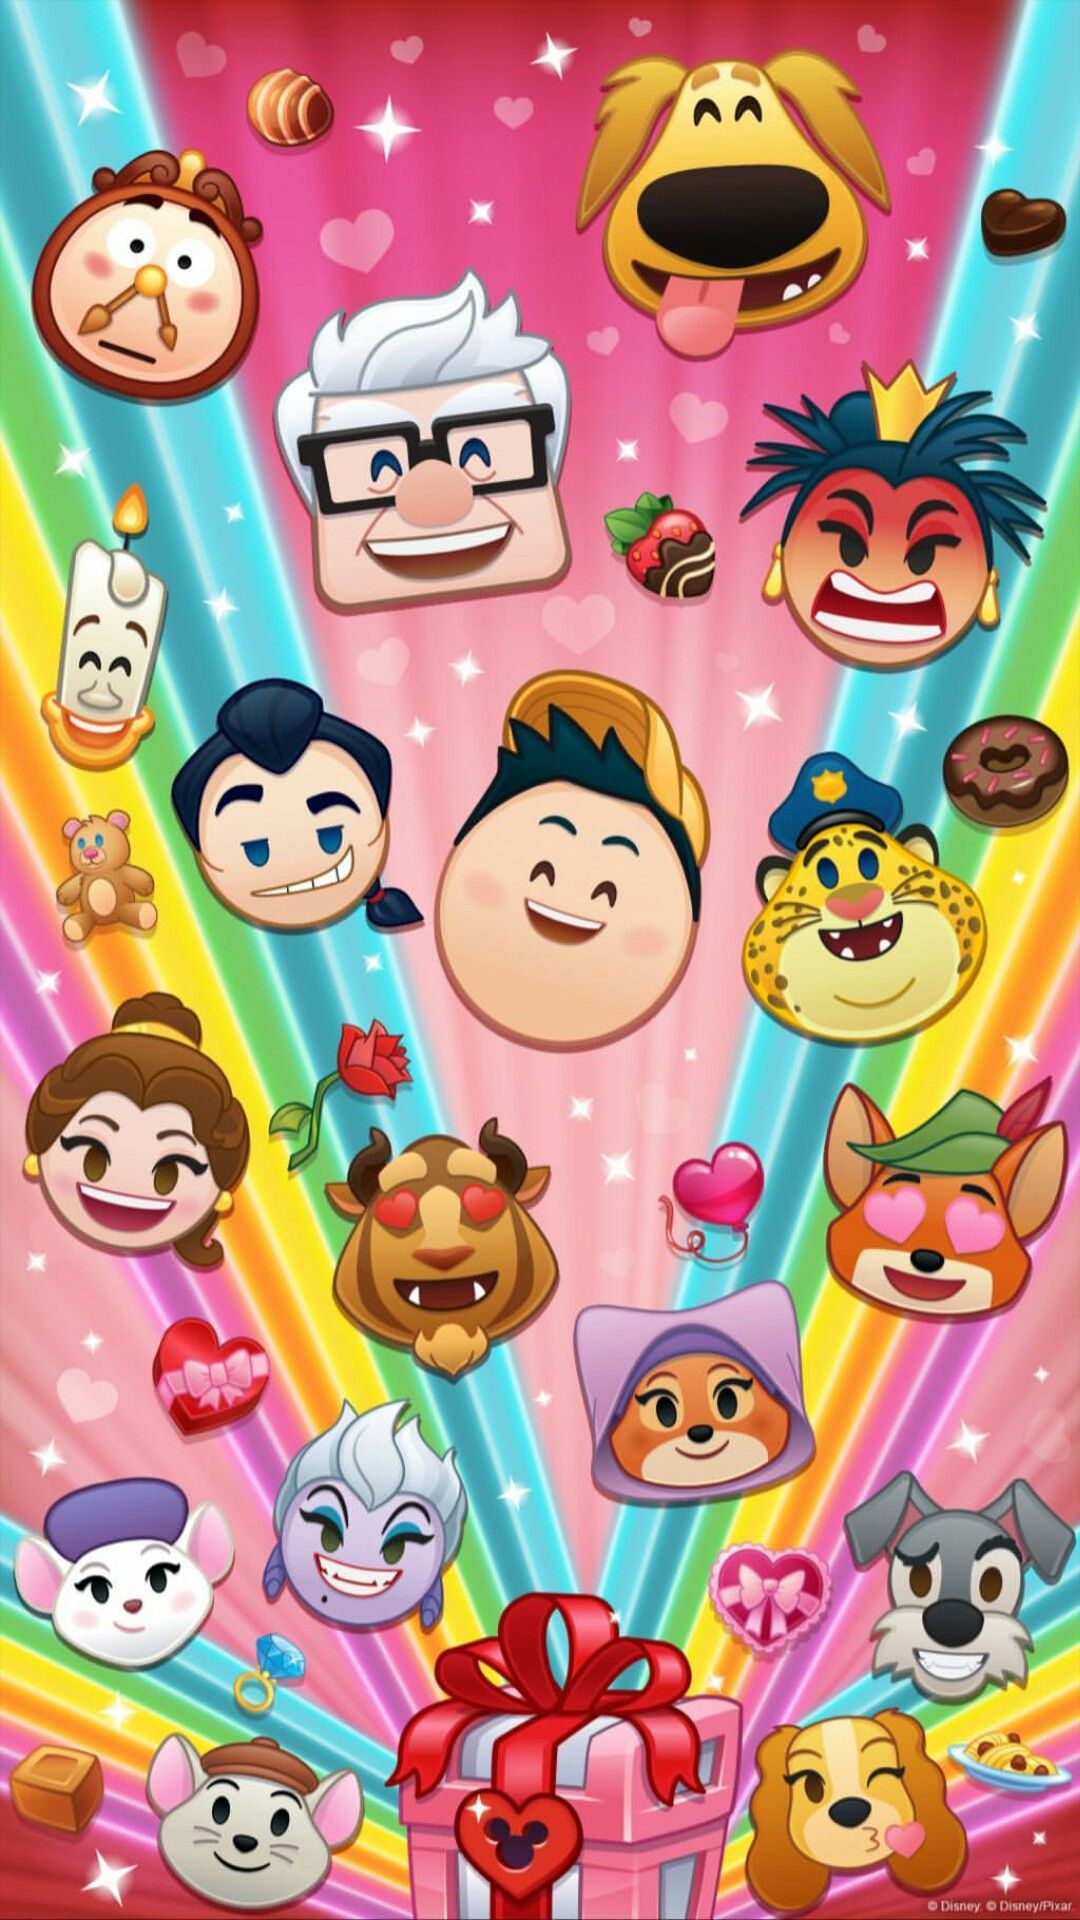 Disney Wallpaper. Disney emoji, Disney emoji blitz, Disney wallpaper